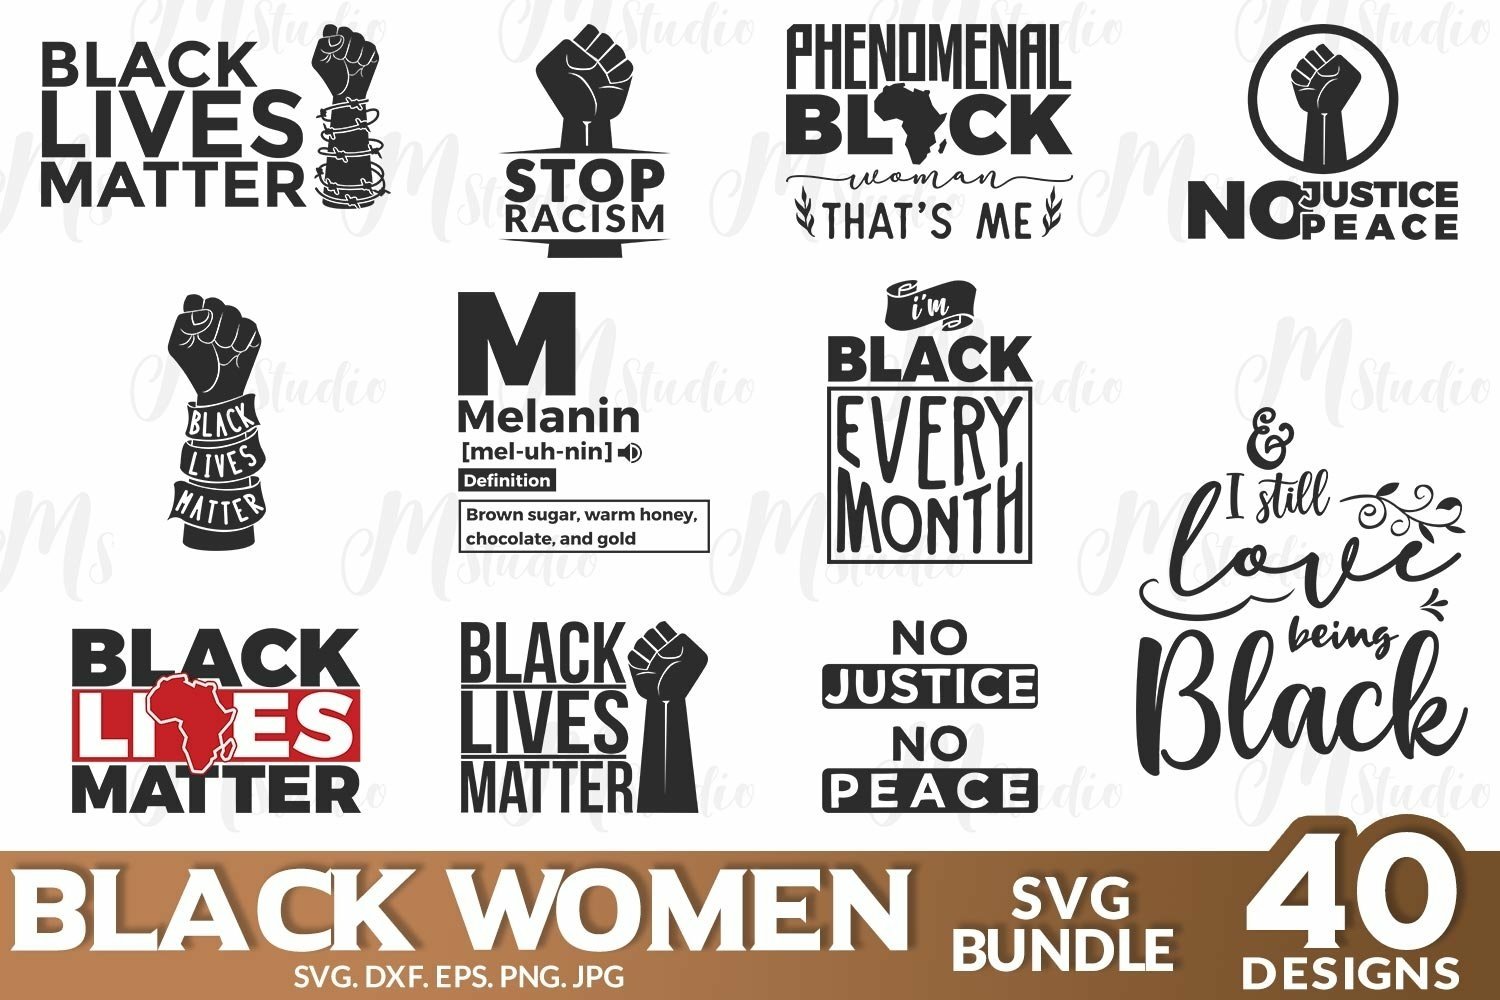 Big amount of black lives matter quotes.